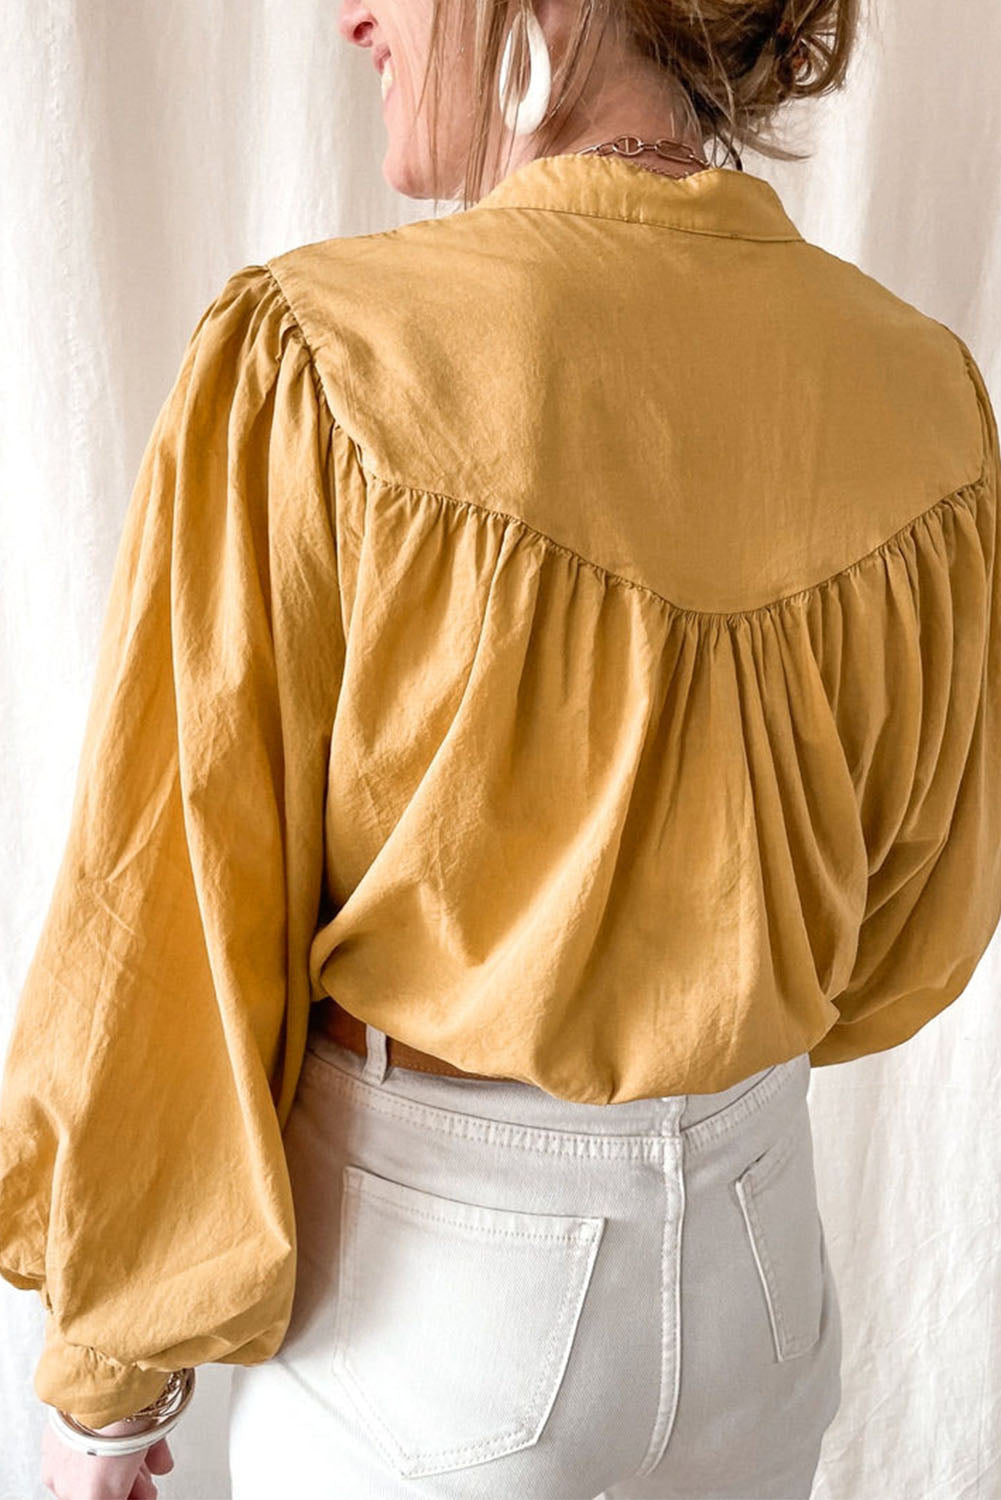 Rumena ohlapna srajca z nagubanimi rokavi